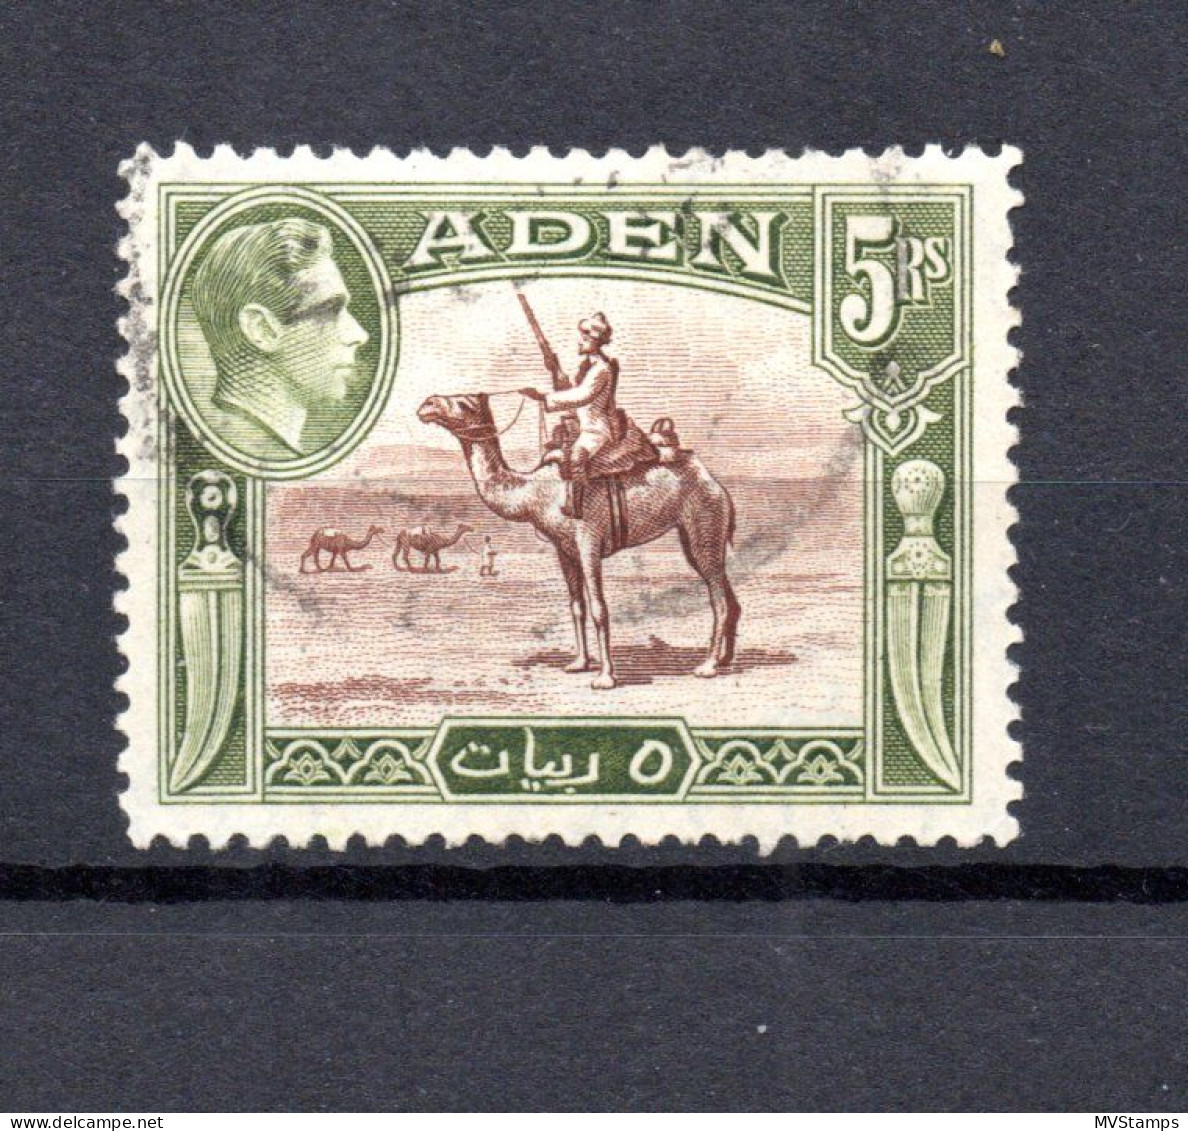 Aden 1939 Old 5 Shilling George VI Definitive Stamps (Michel 27) Nice Used - Aden (1854-1963)